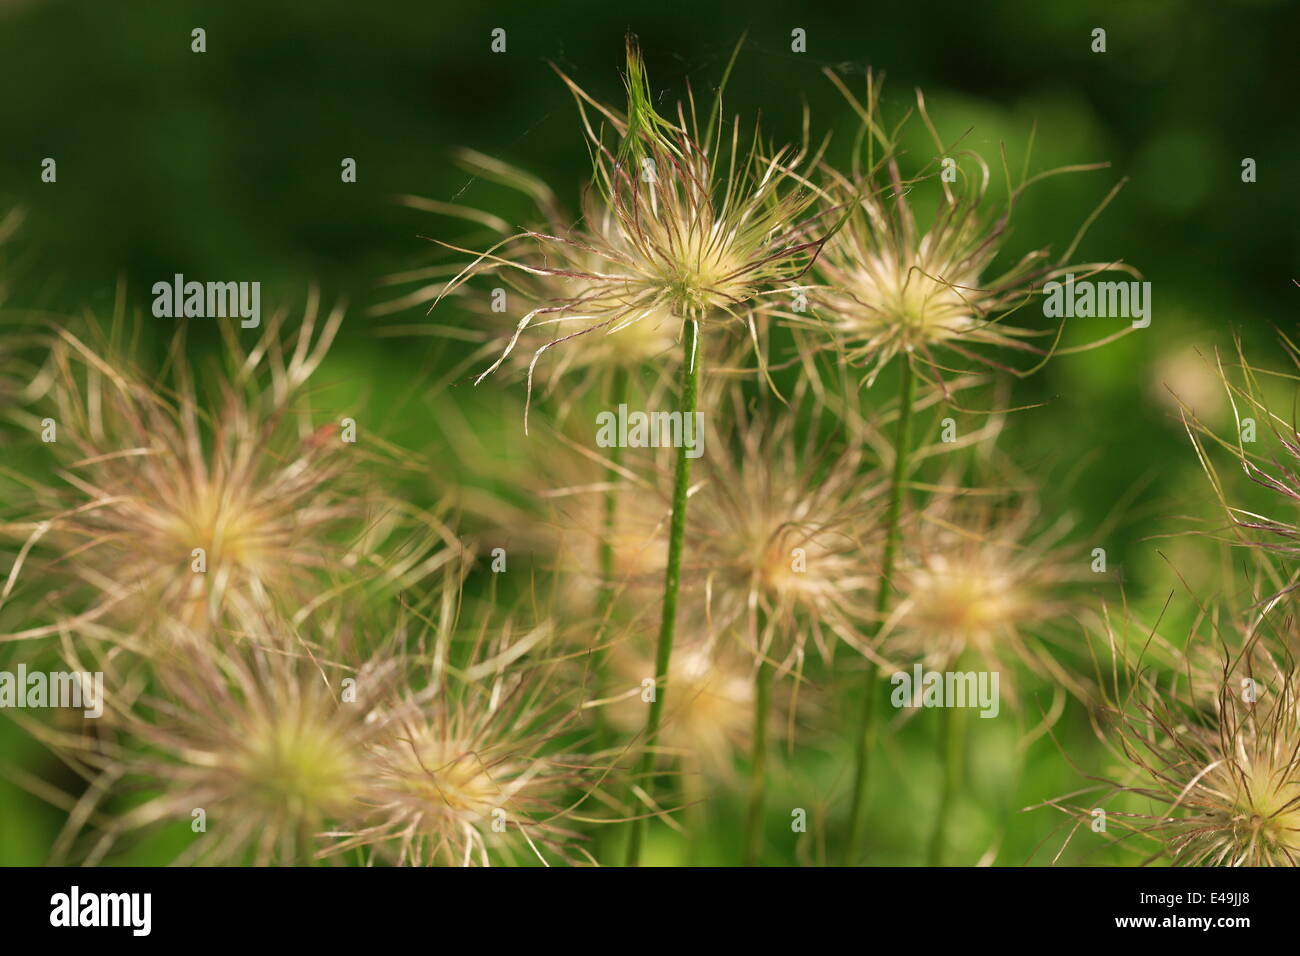 Common pasque flower - Pulsatilla vulgaris Stock Photo